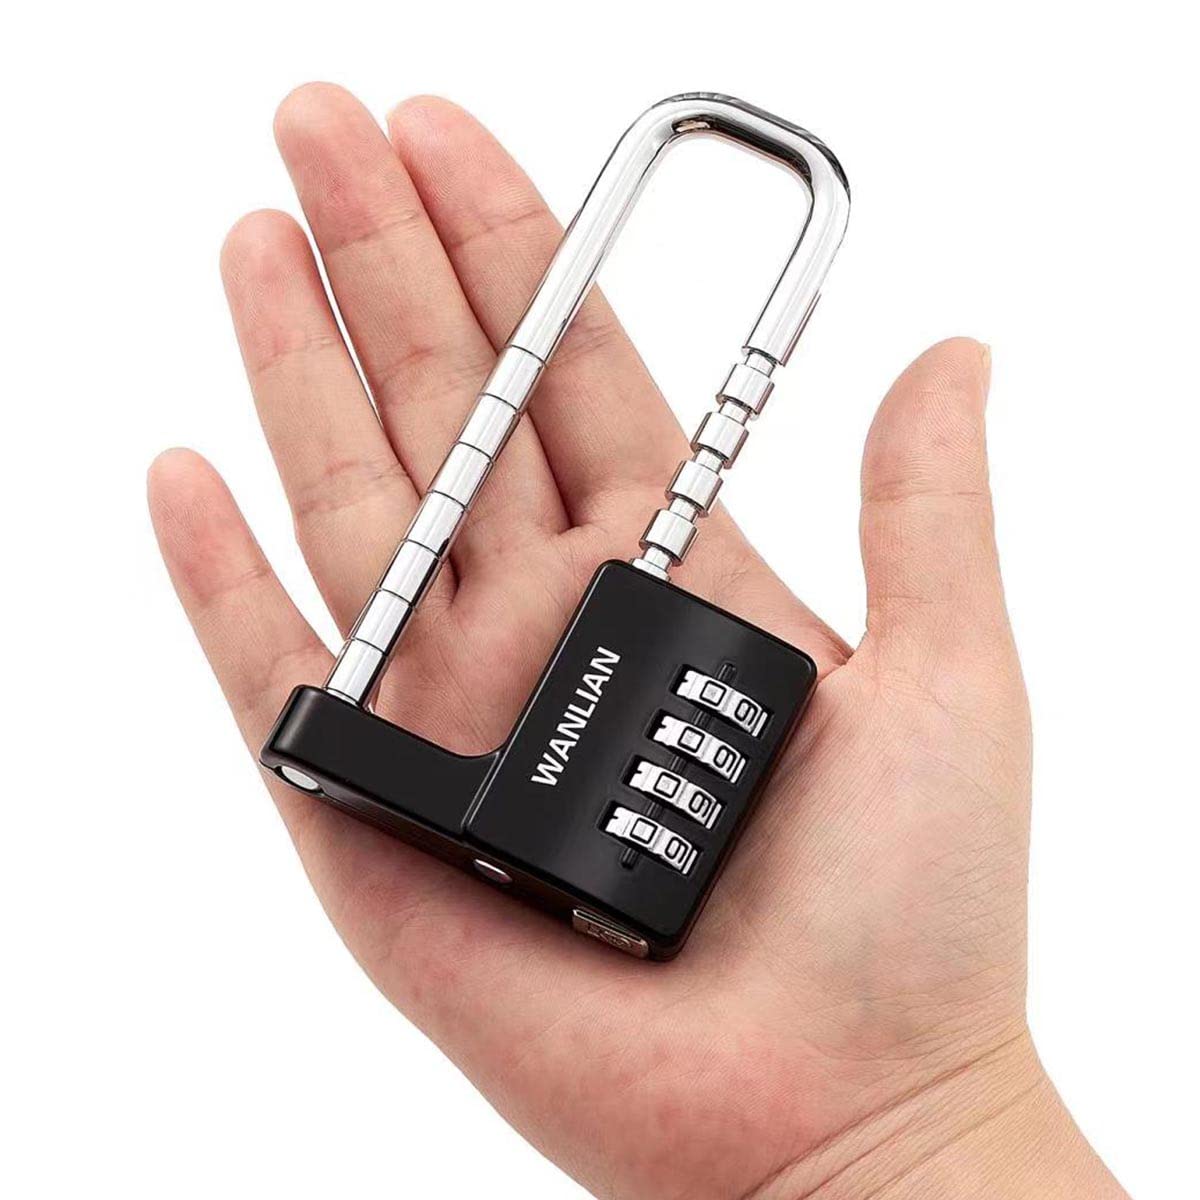 Combination Lock,4 Digit Combination Lock 3/8Inch Long Shackle Outdoor Waterproof Padlock for School Locker, Gym Locker, Hasp Storage, Fence, Gate, Cooler, Case (Black, 1 Pack)